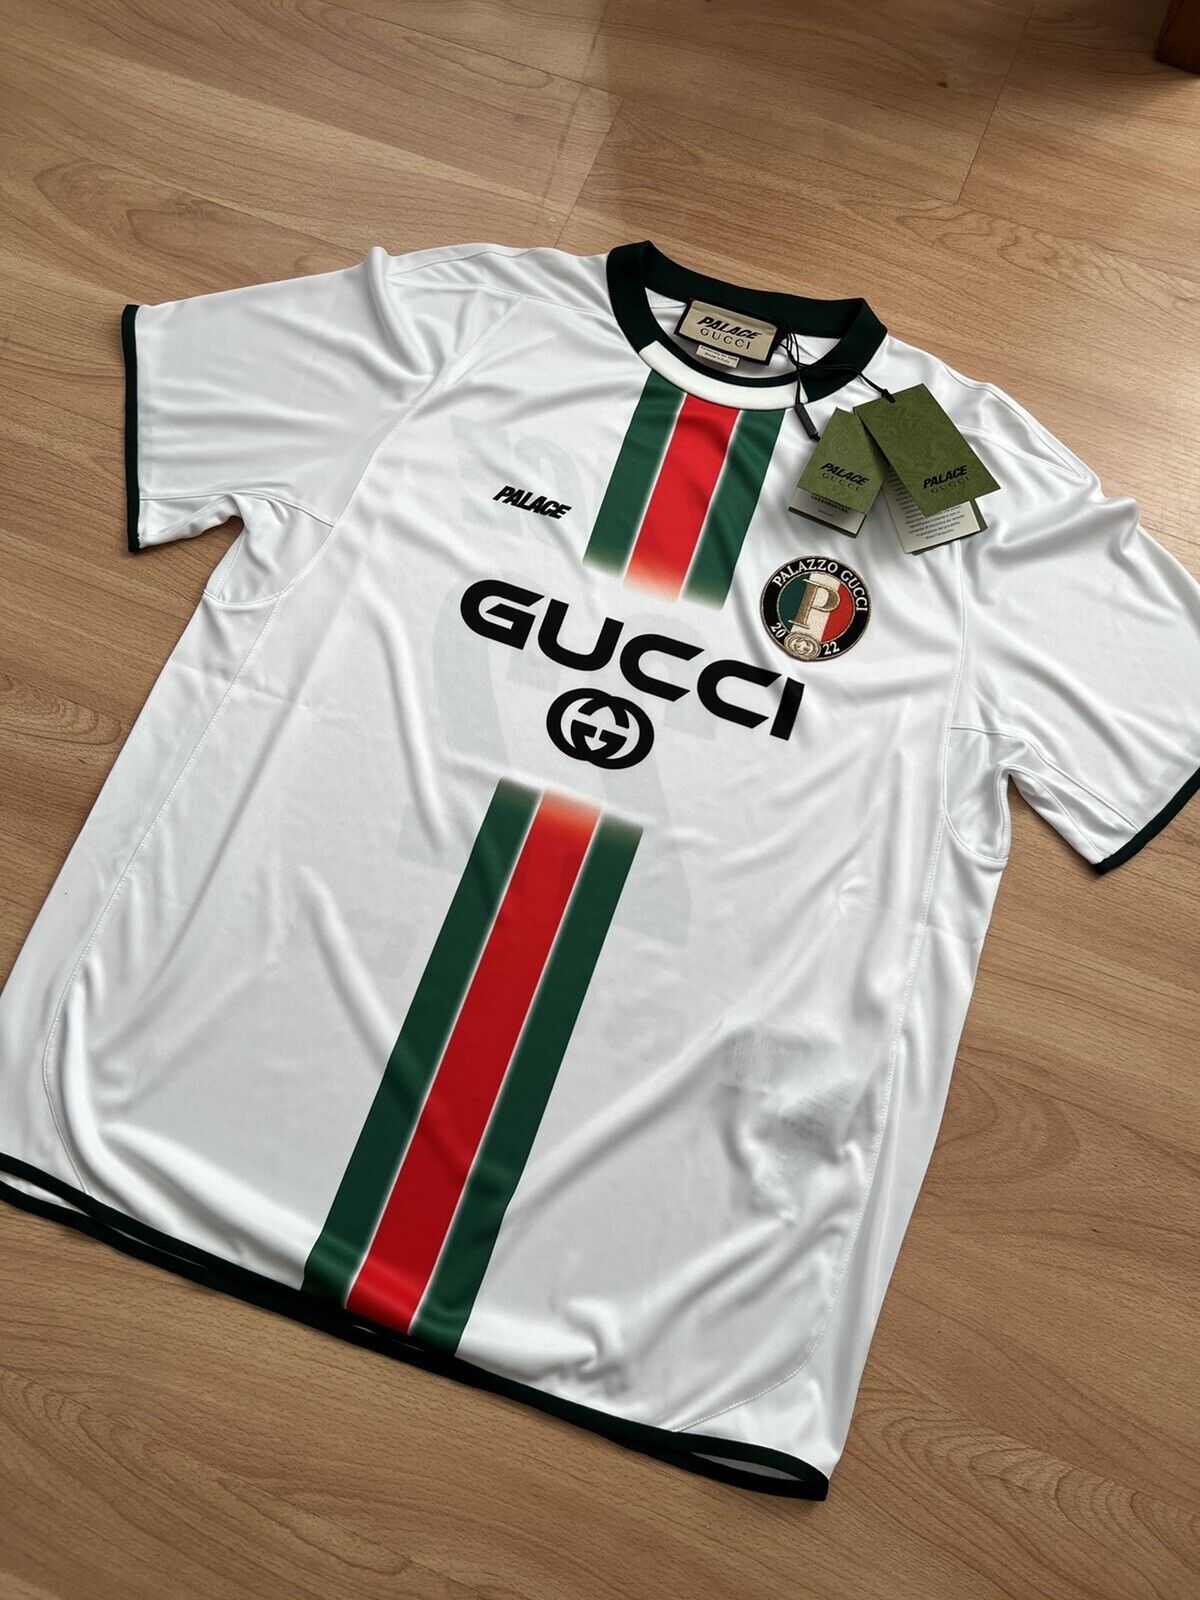 gucci x palace Printed football top technical jersey T-shirt size medium